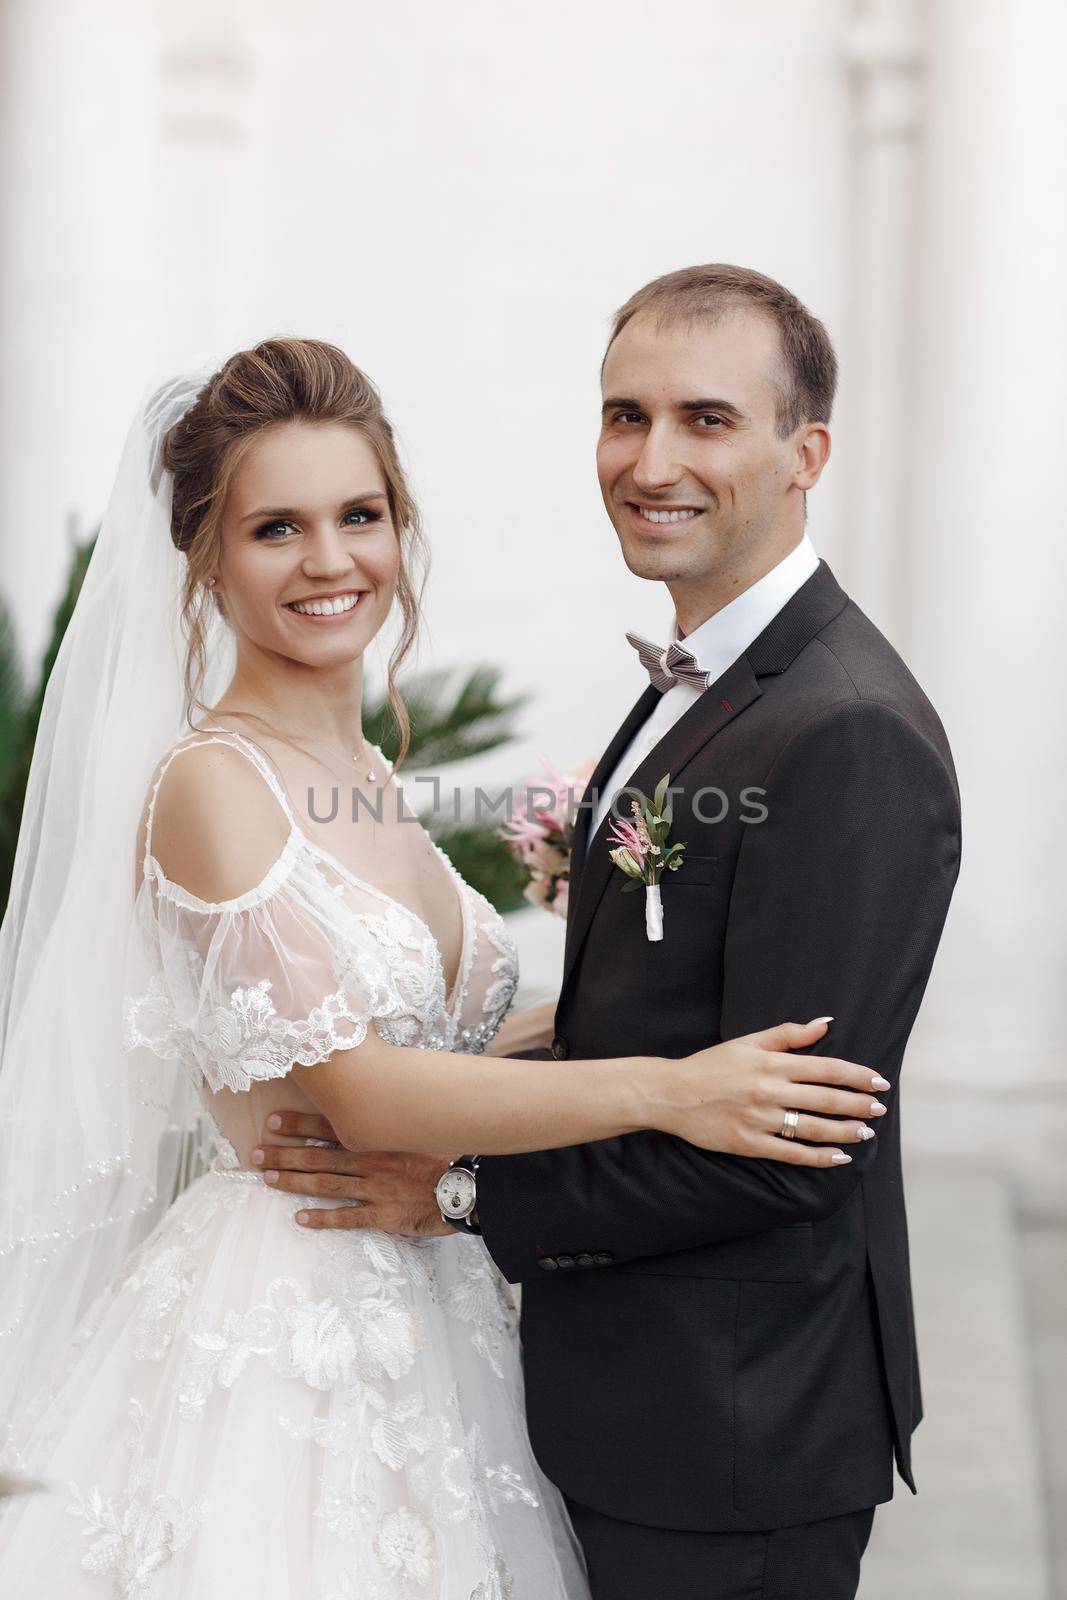 Wedding portrait of a smiling bride by splash